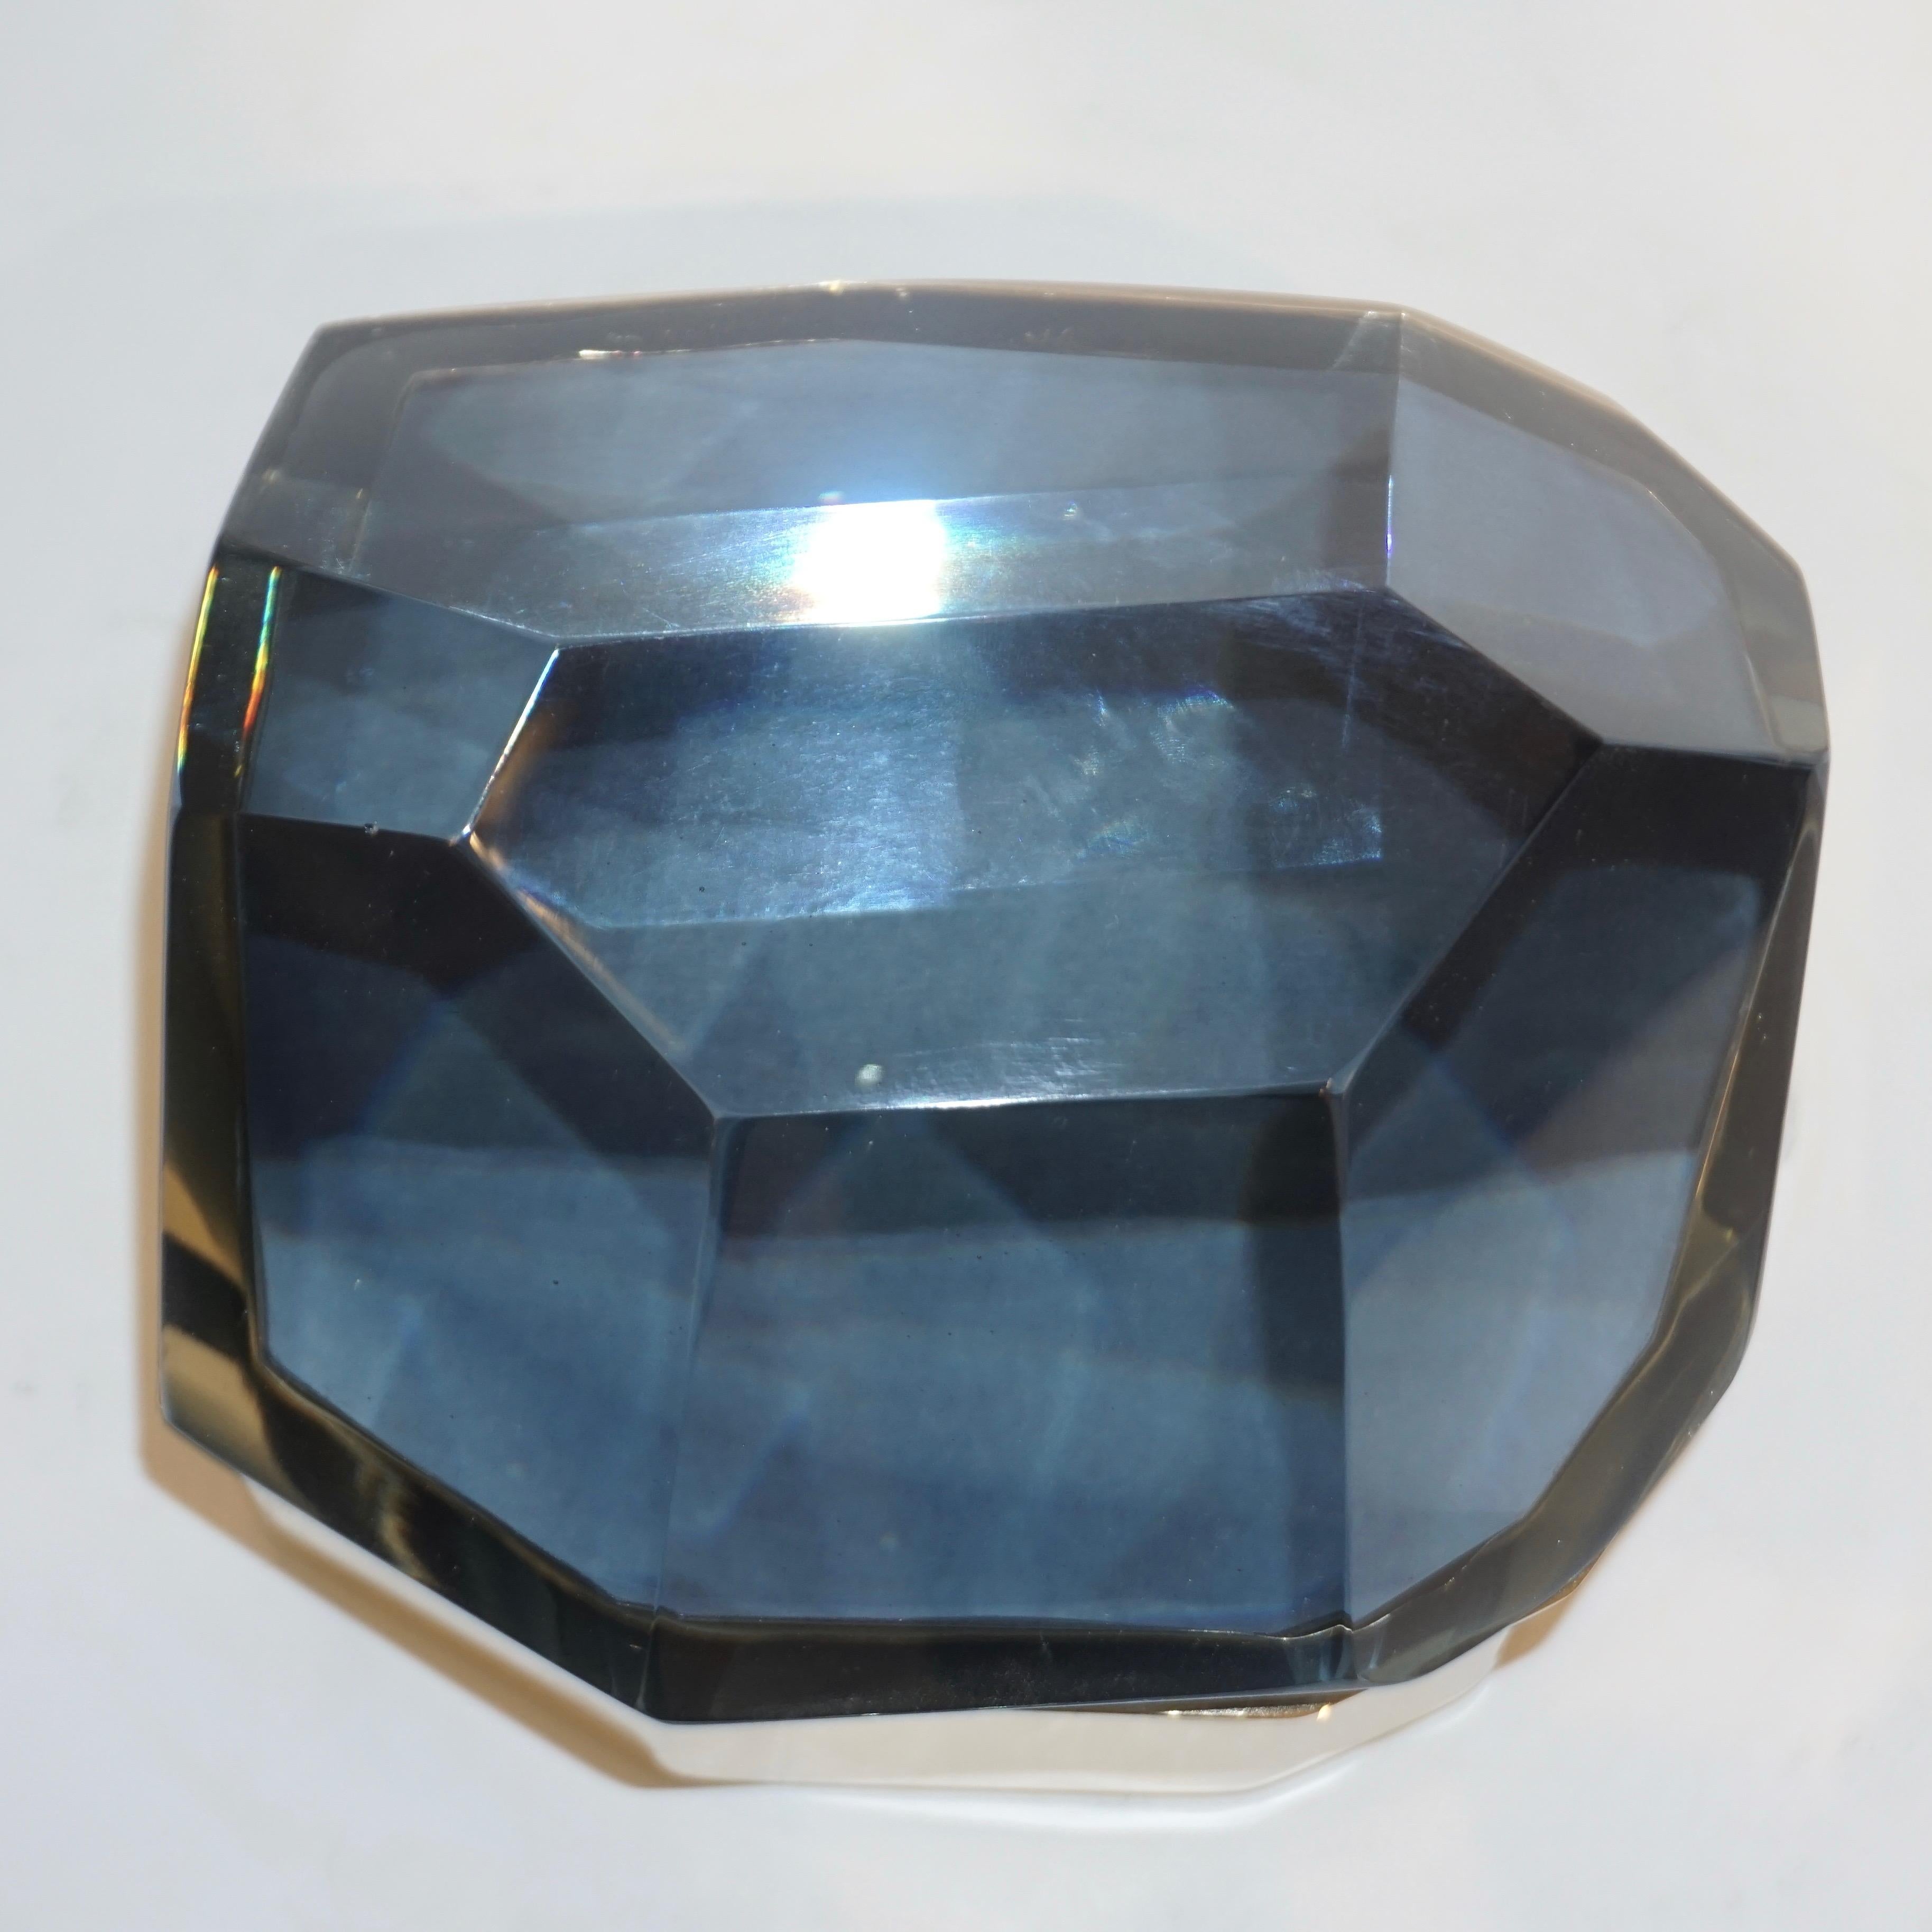 Toso Italian Modern Diamond-Shaped Smoked Murano Glass & Brass Jewel-Like Box (21. Jahrhundert und zeitgenössisch)